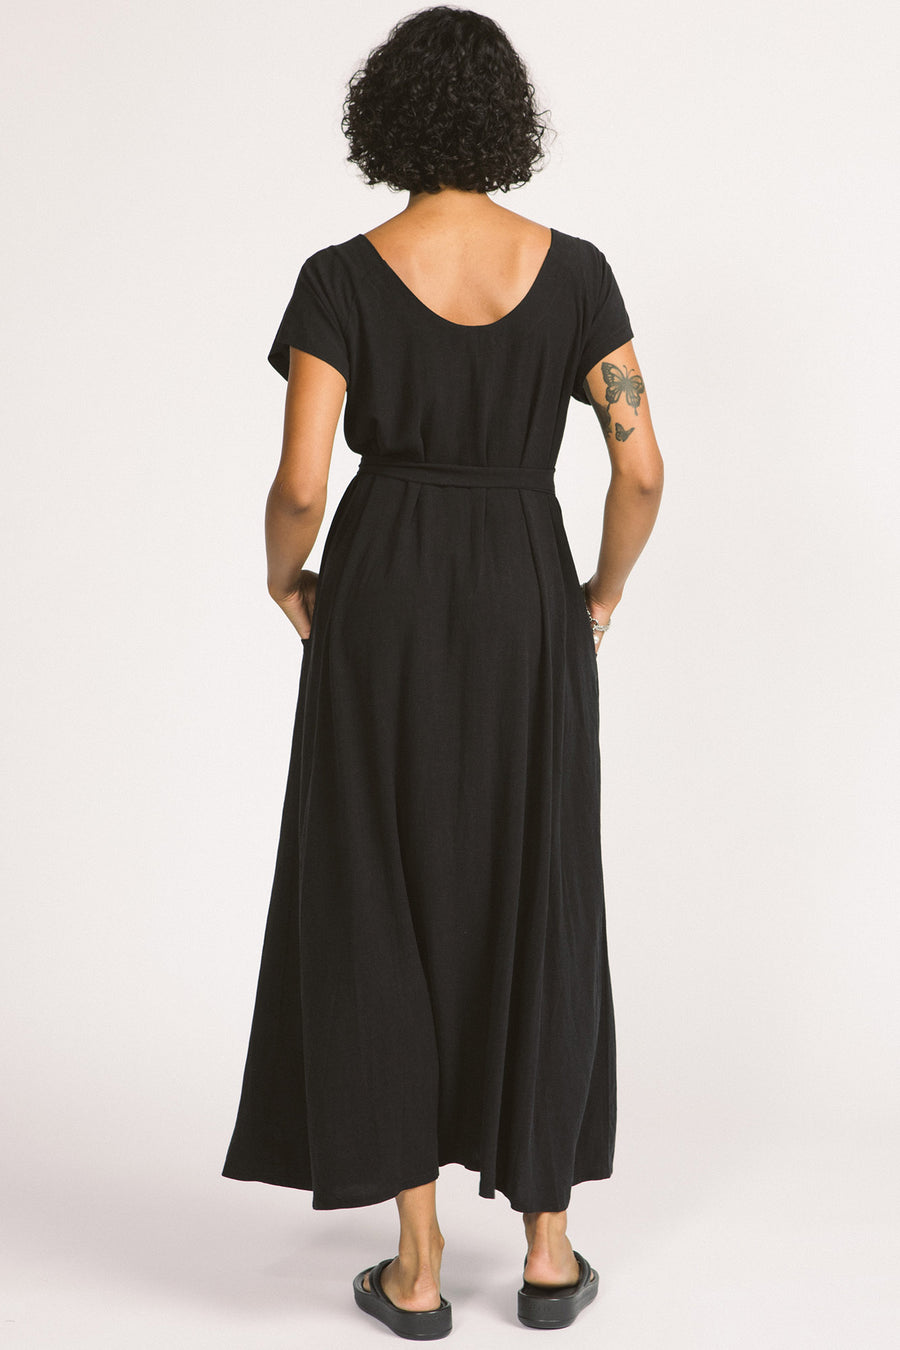 Back view of woman wearing black maxi Allison Wonderland Enola Dress tied at waist. 